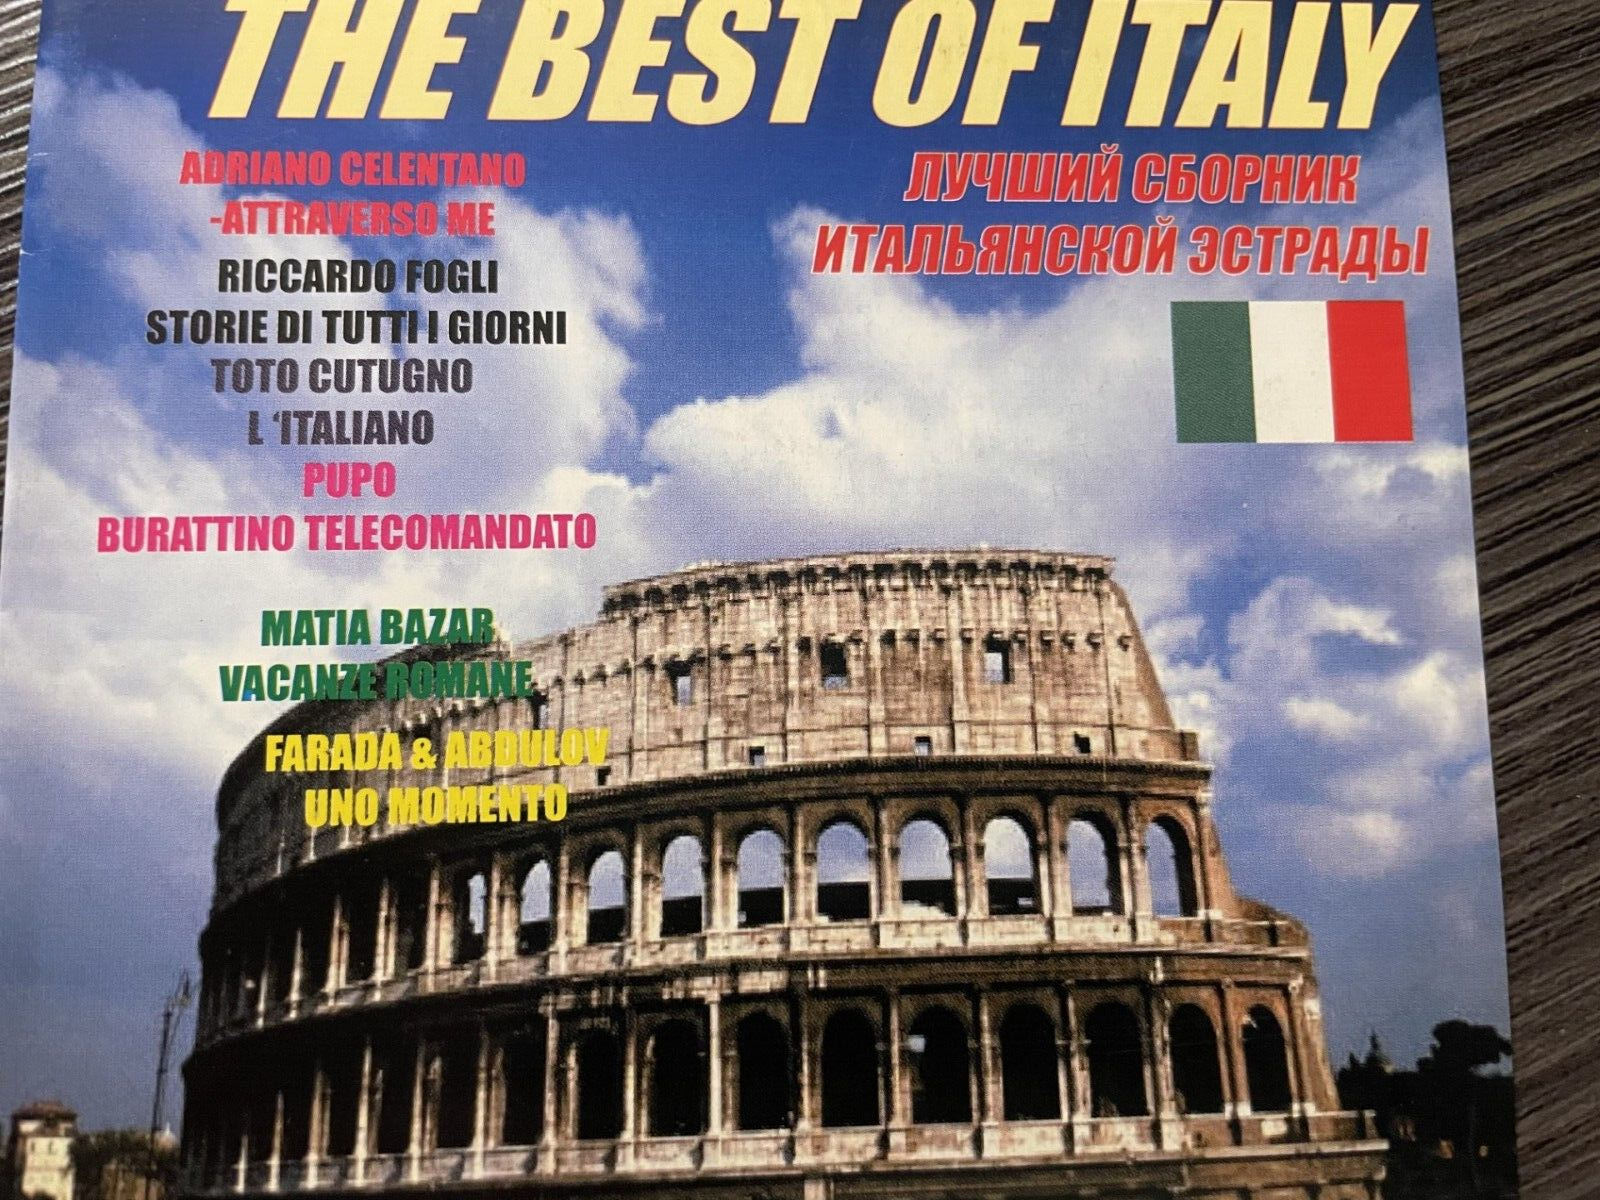 The Best of Italy - Italian pop - 2 CD set 42 tracks